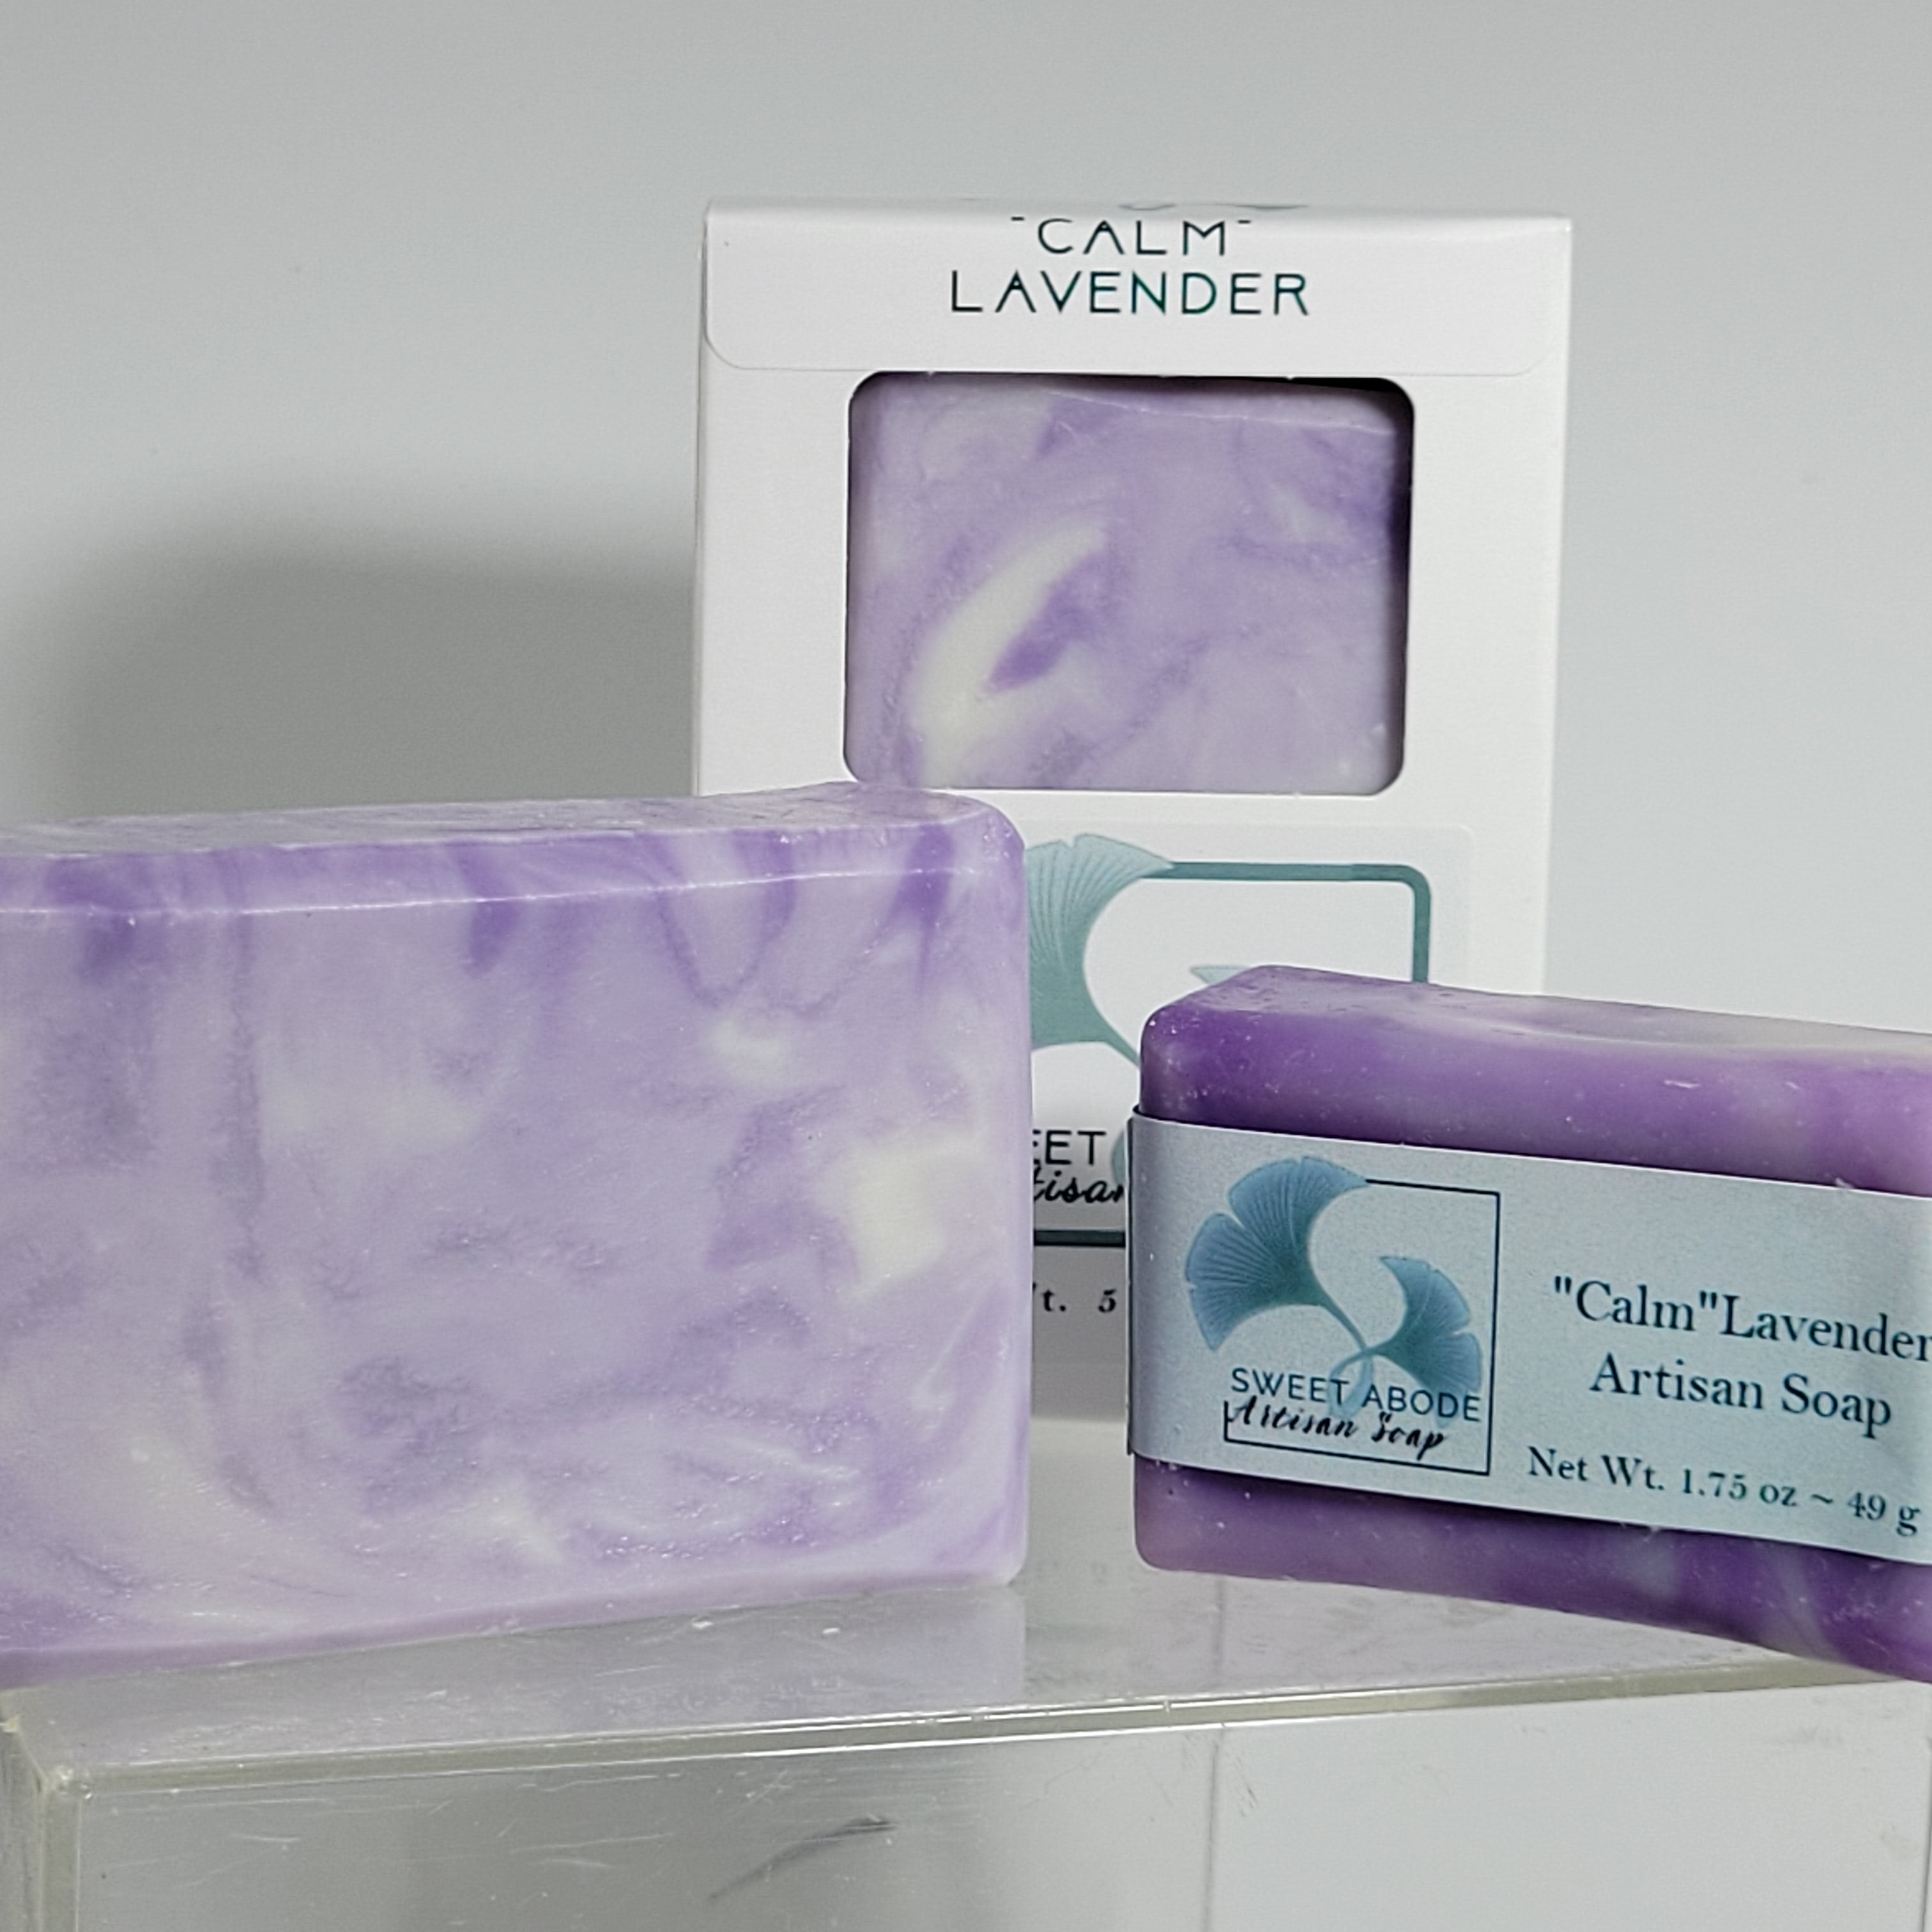 Calm Lavender Artisan Soap